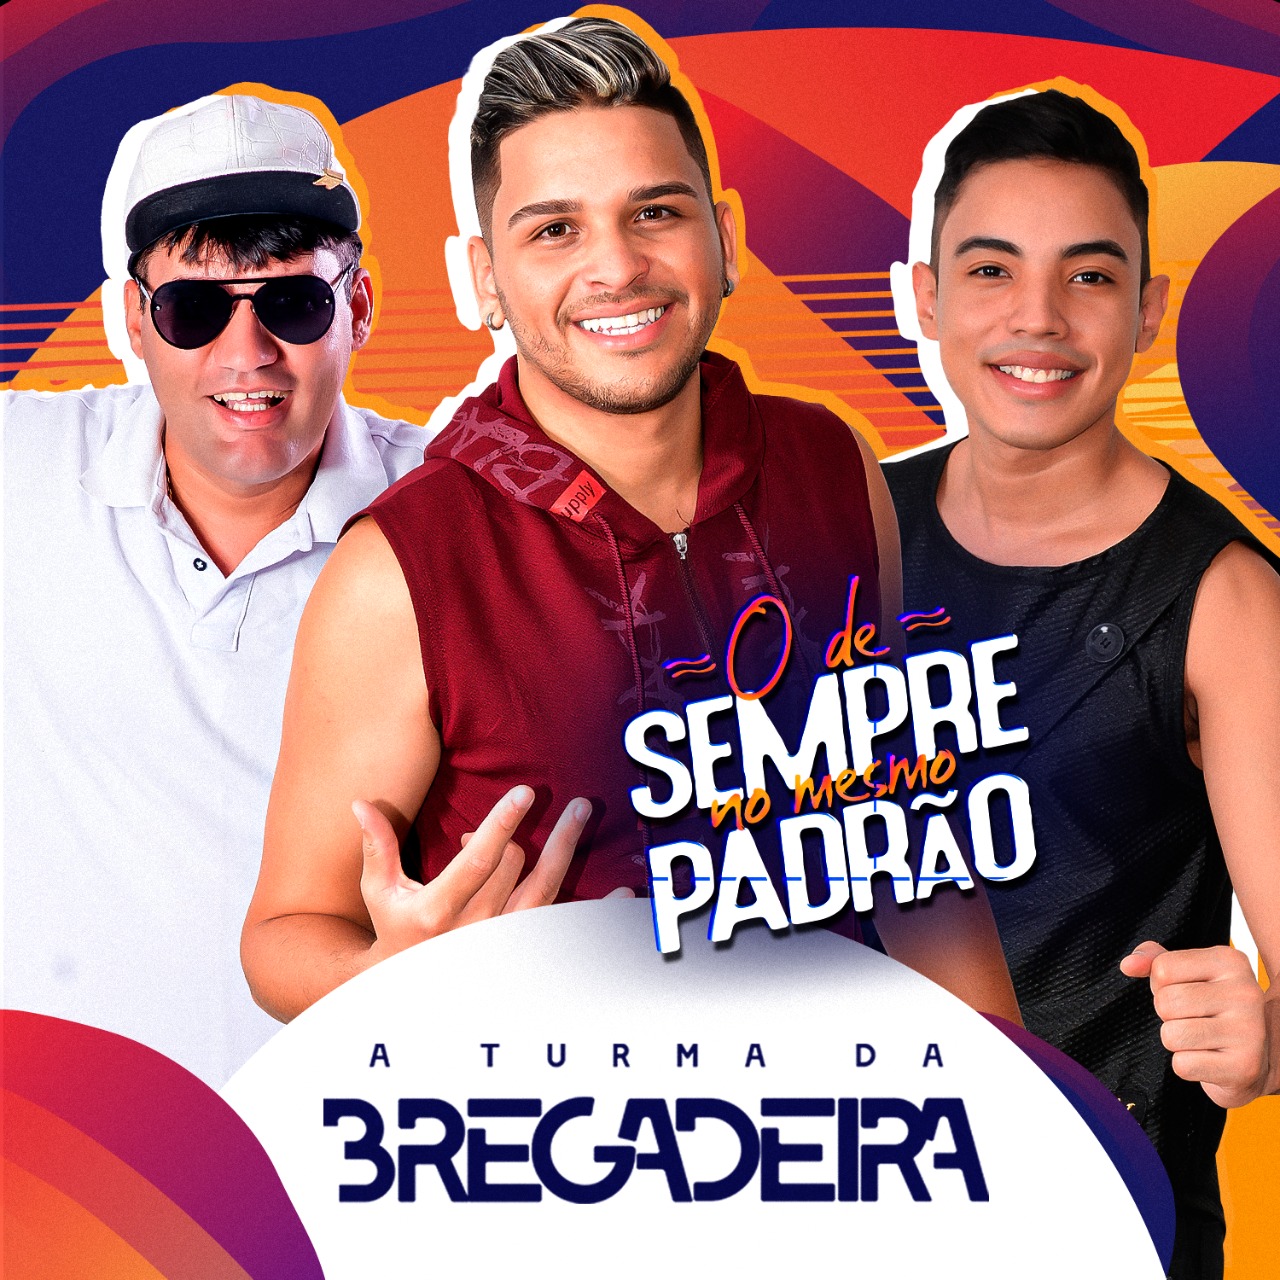 A TURMA DA BREGADEIRA - O DE SEMPRE NO MESMO PADRO - CD 2021.2